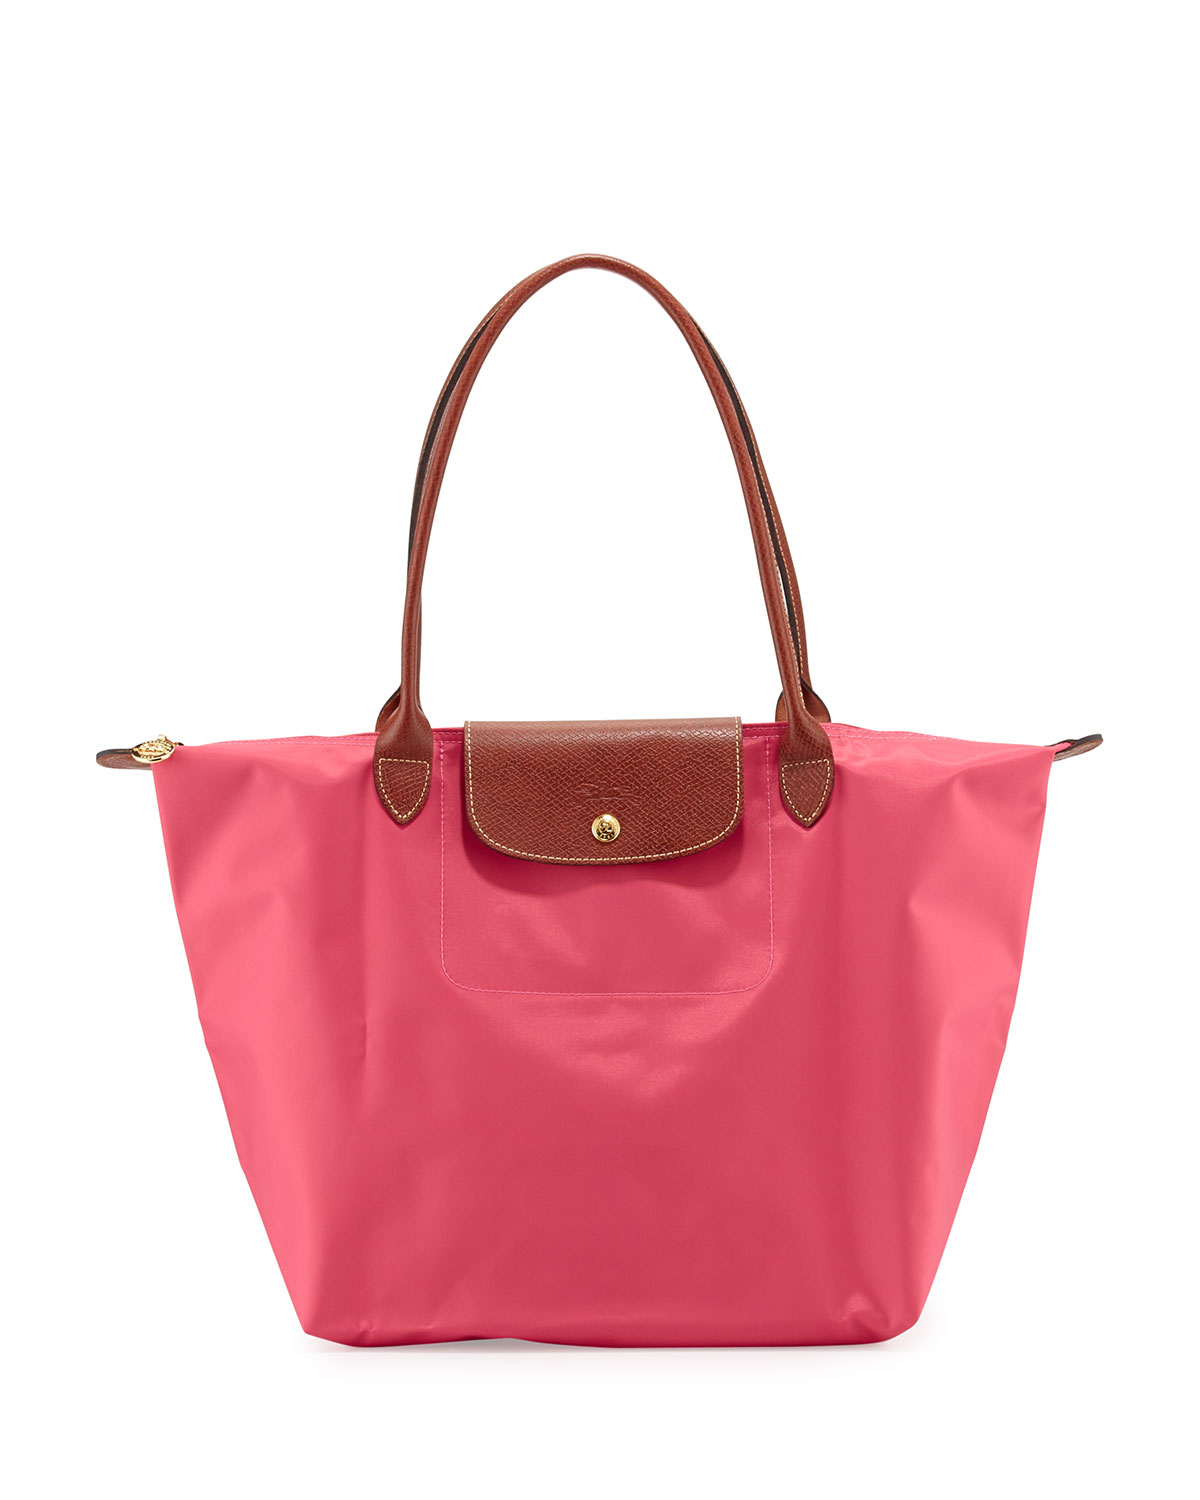 Lyst - Longchamp Le Pliage Large Shoulder Tote Bag in Pink